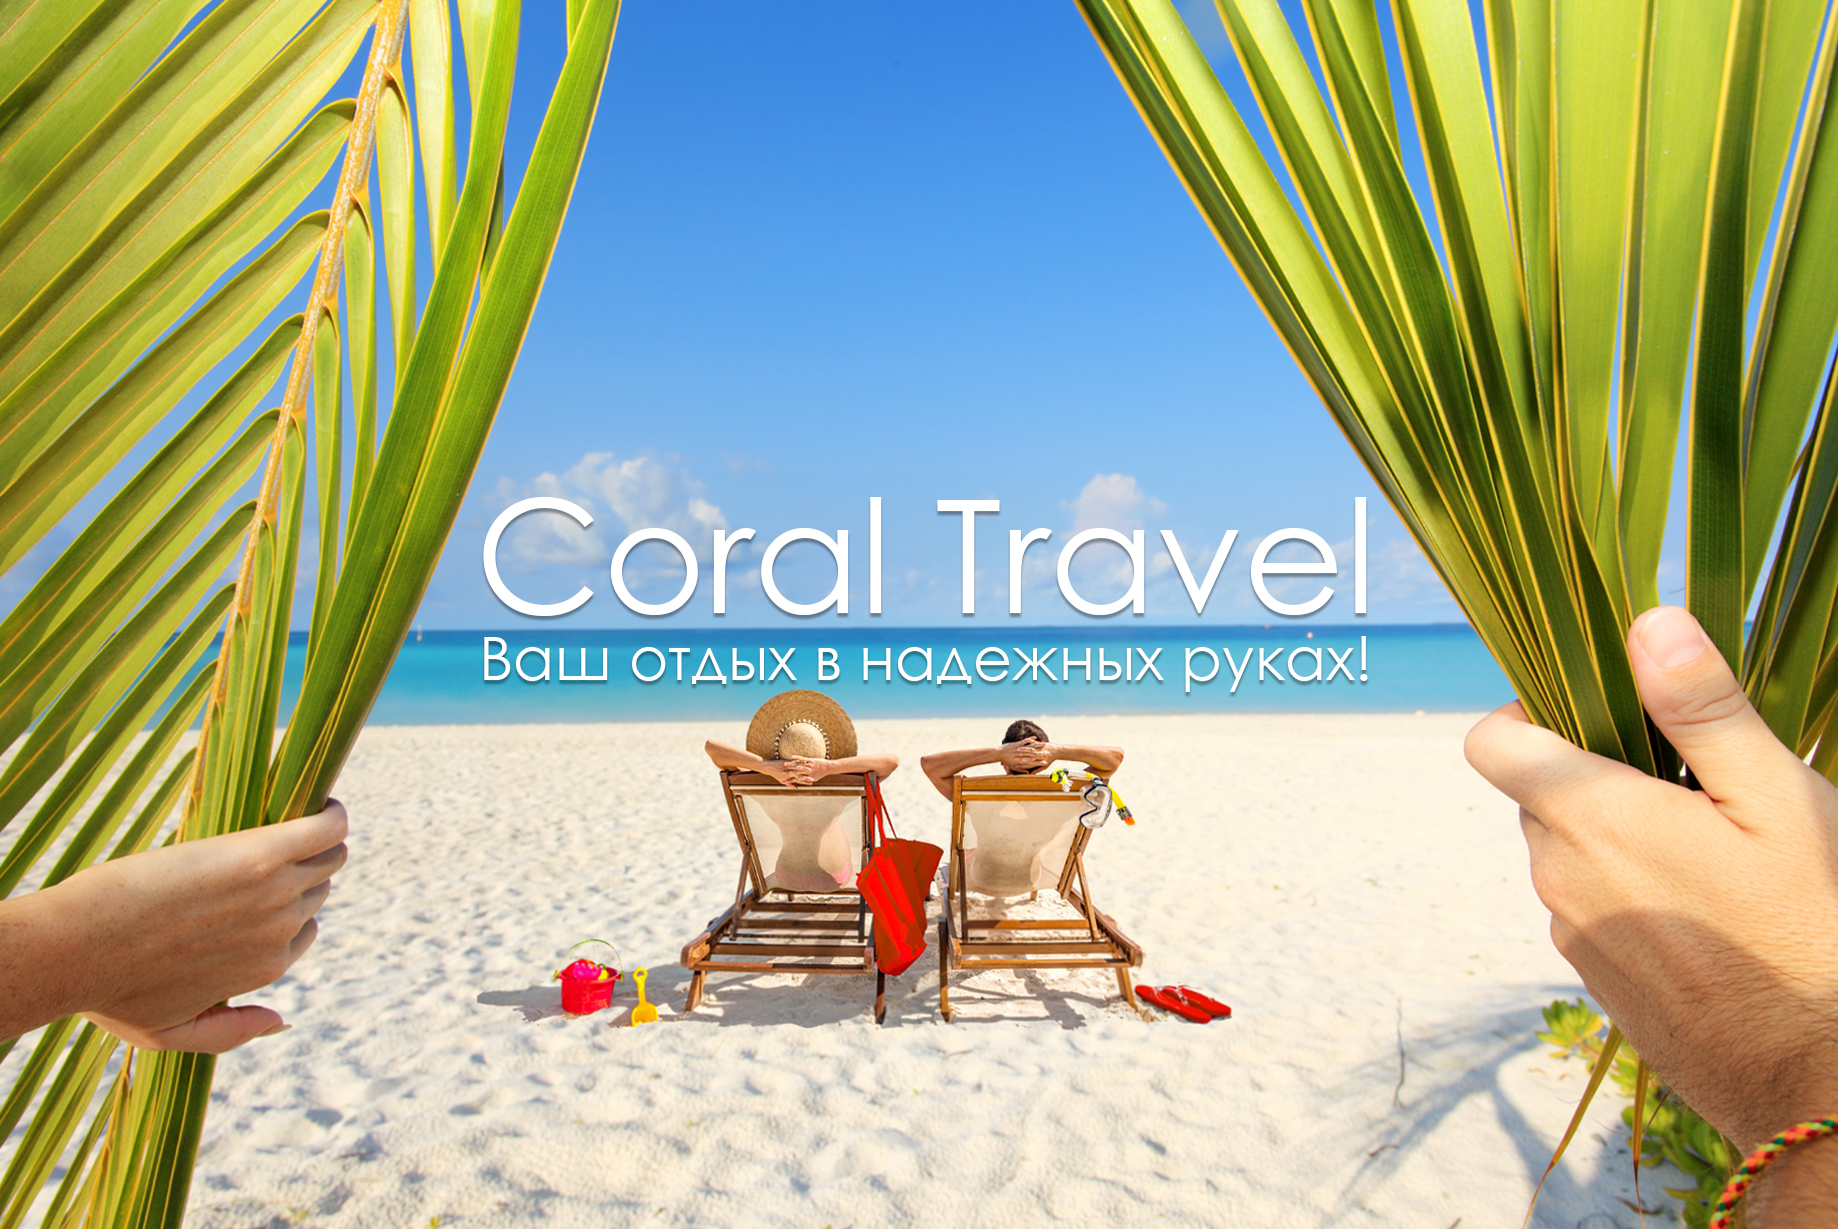 Coral Travel - ваш отдых в надежных руках